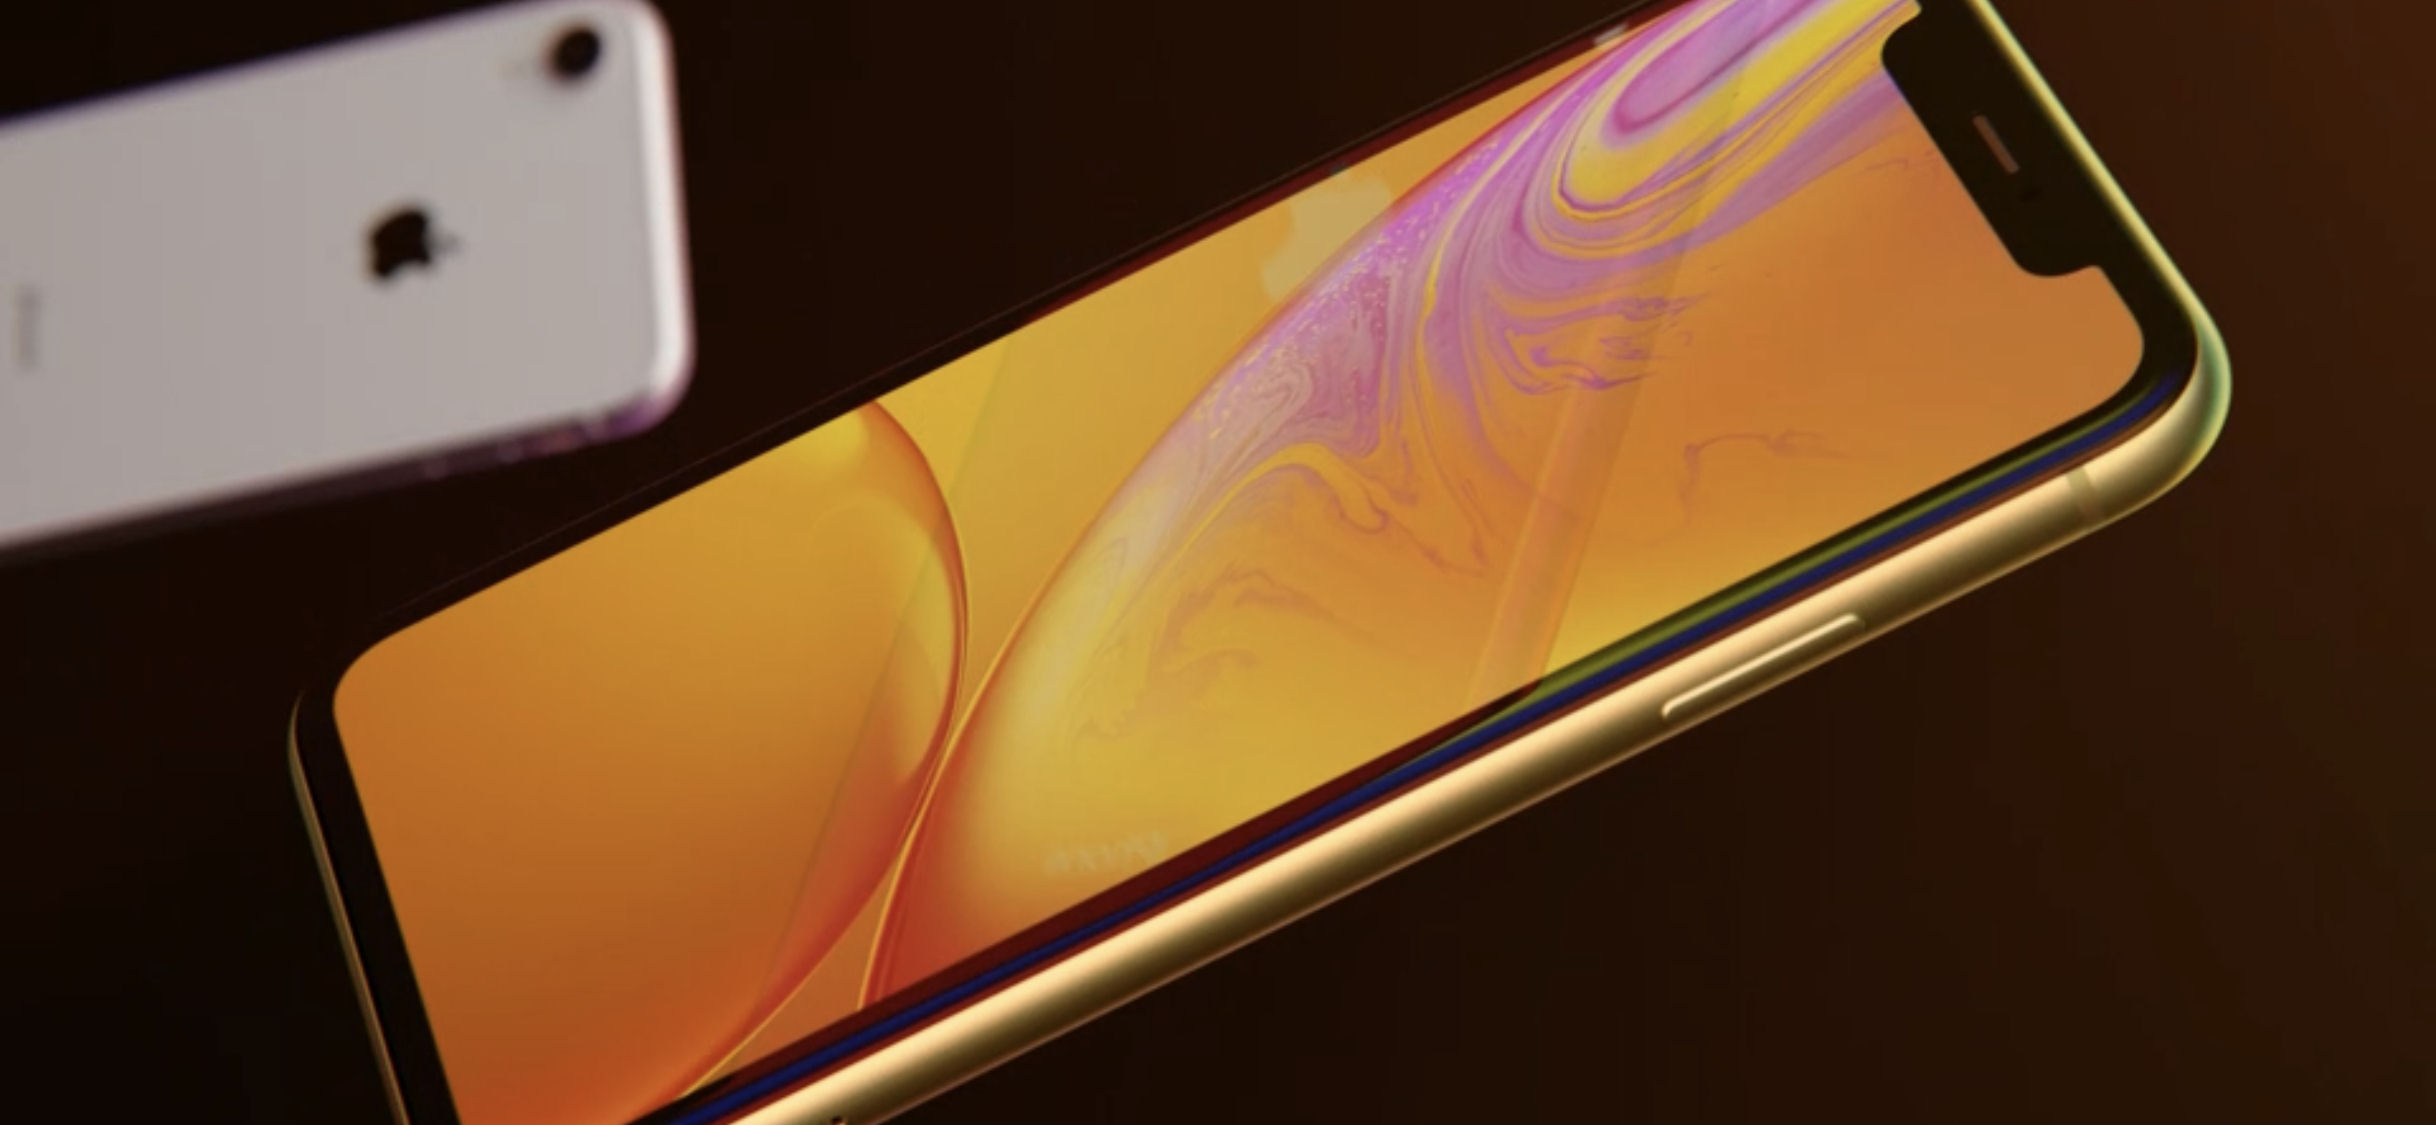 「iPhone XR」発表 6.1型液晶搭載でホームボタンなし 6色展開【詳報】 - ITmedia Mobile